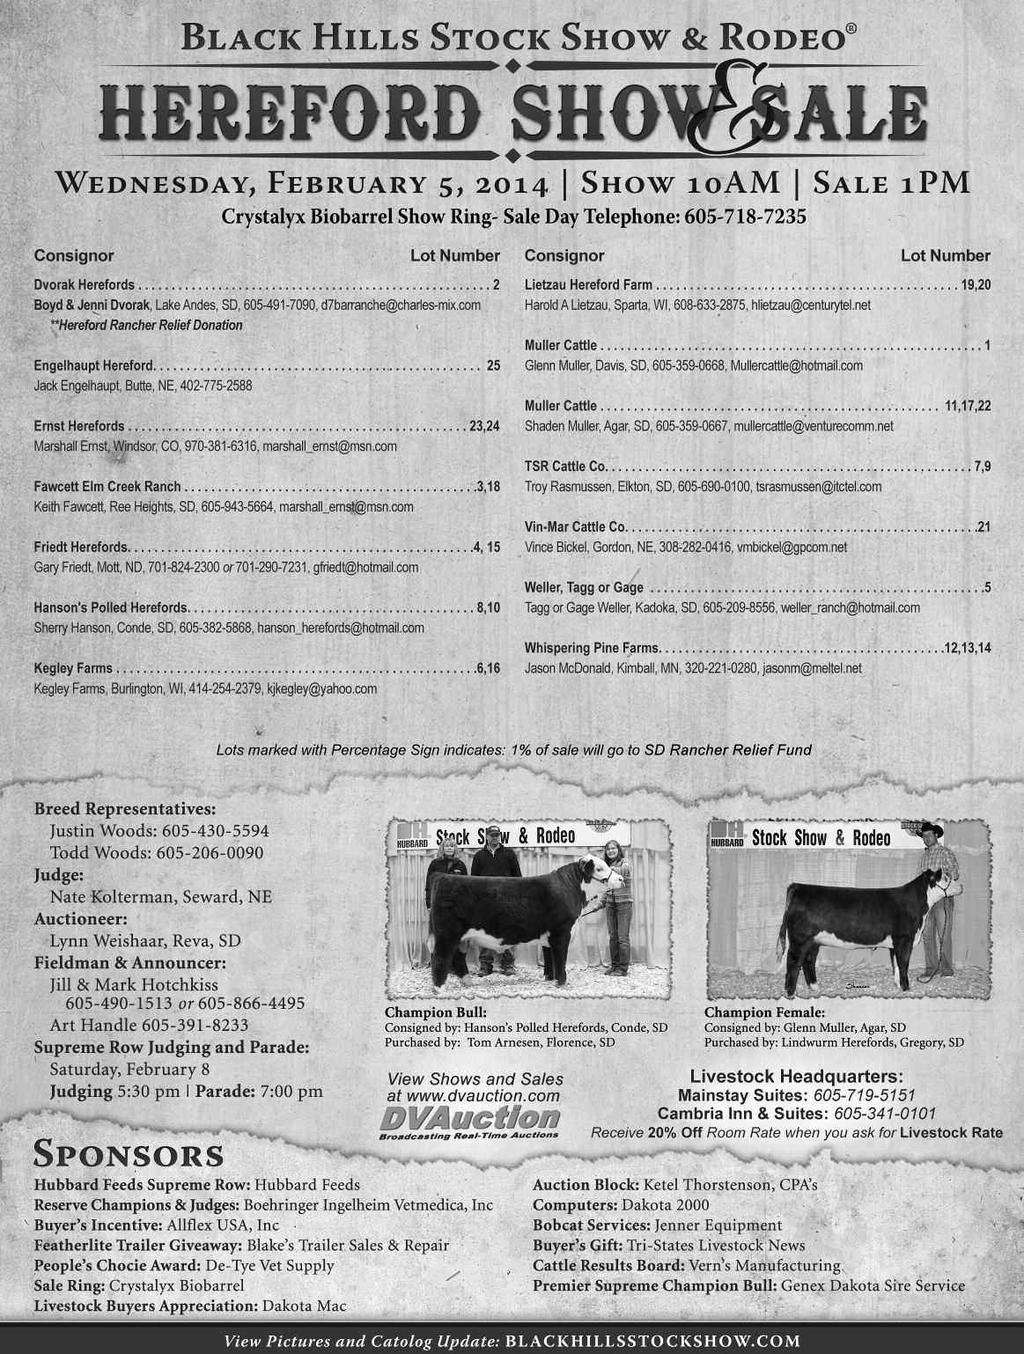 Hereford 76 BHSS Livestock & Event Guide